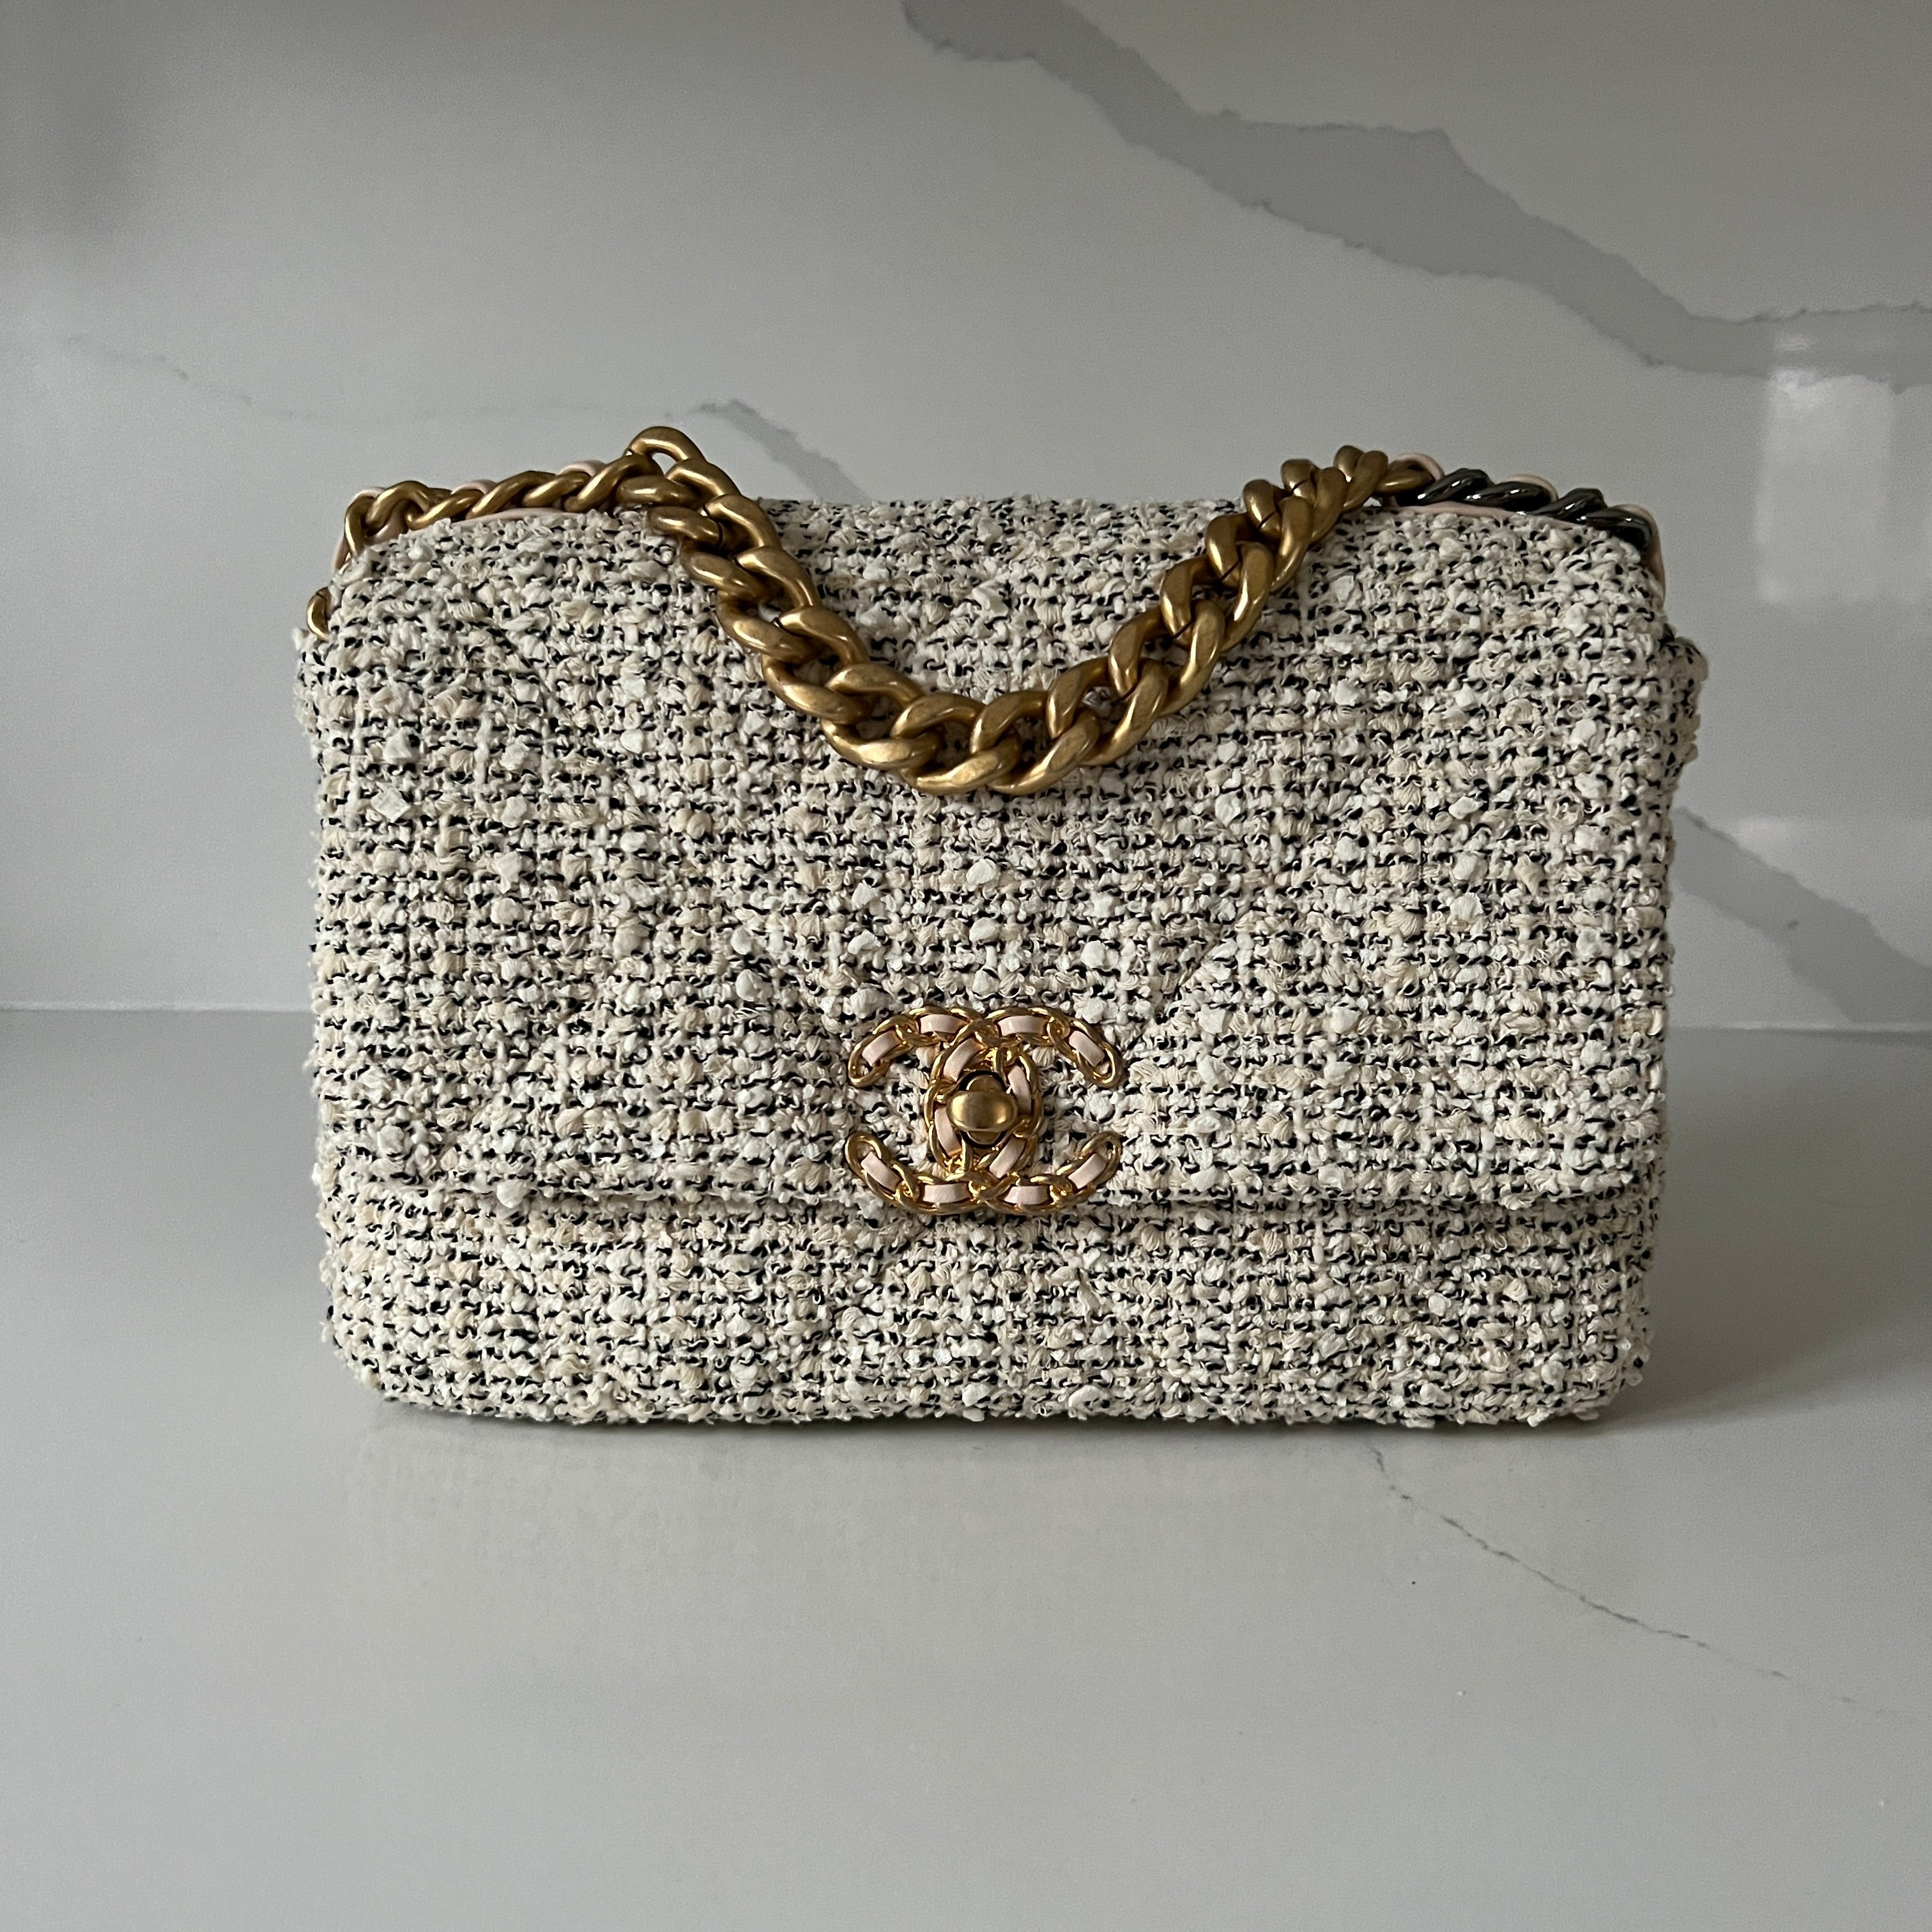 Chanel 19 Small, Oreo Beige Tweed, Like New in Box - Julia Rose